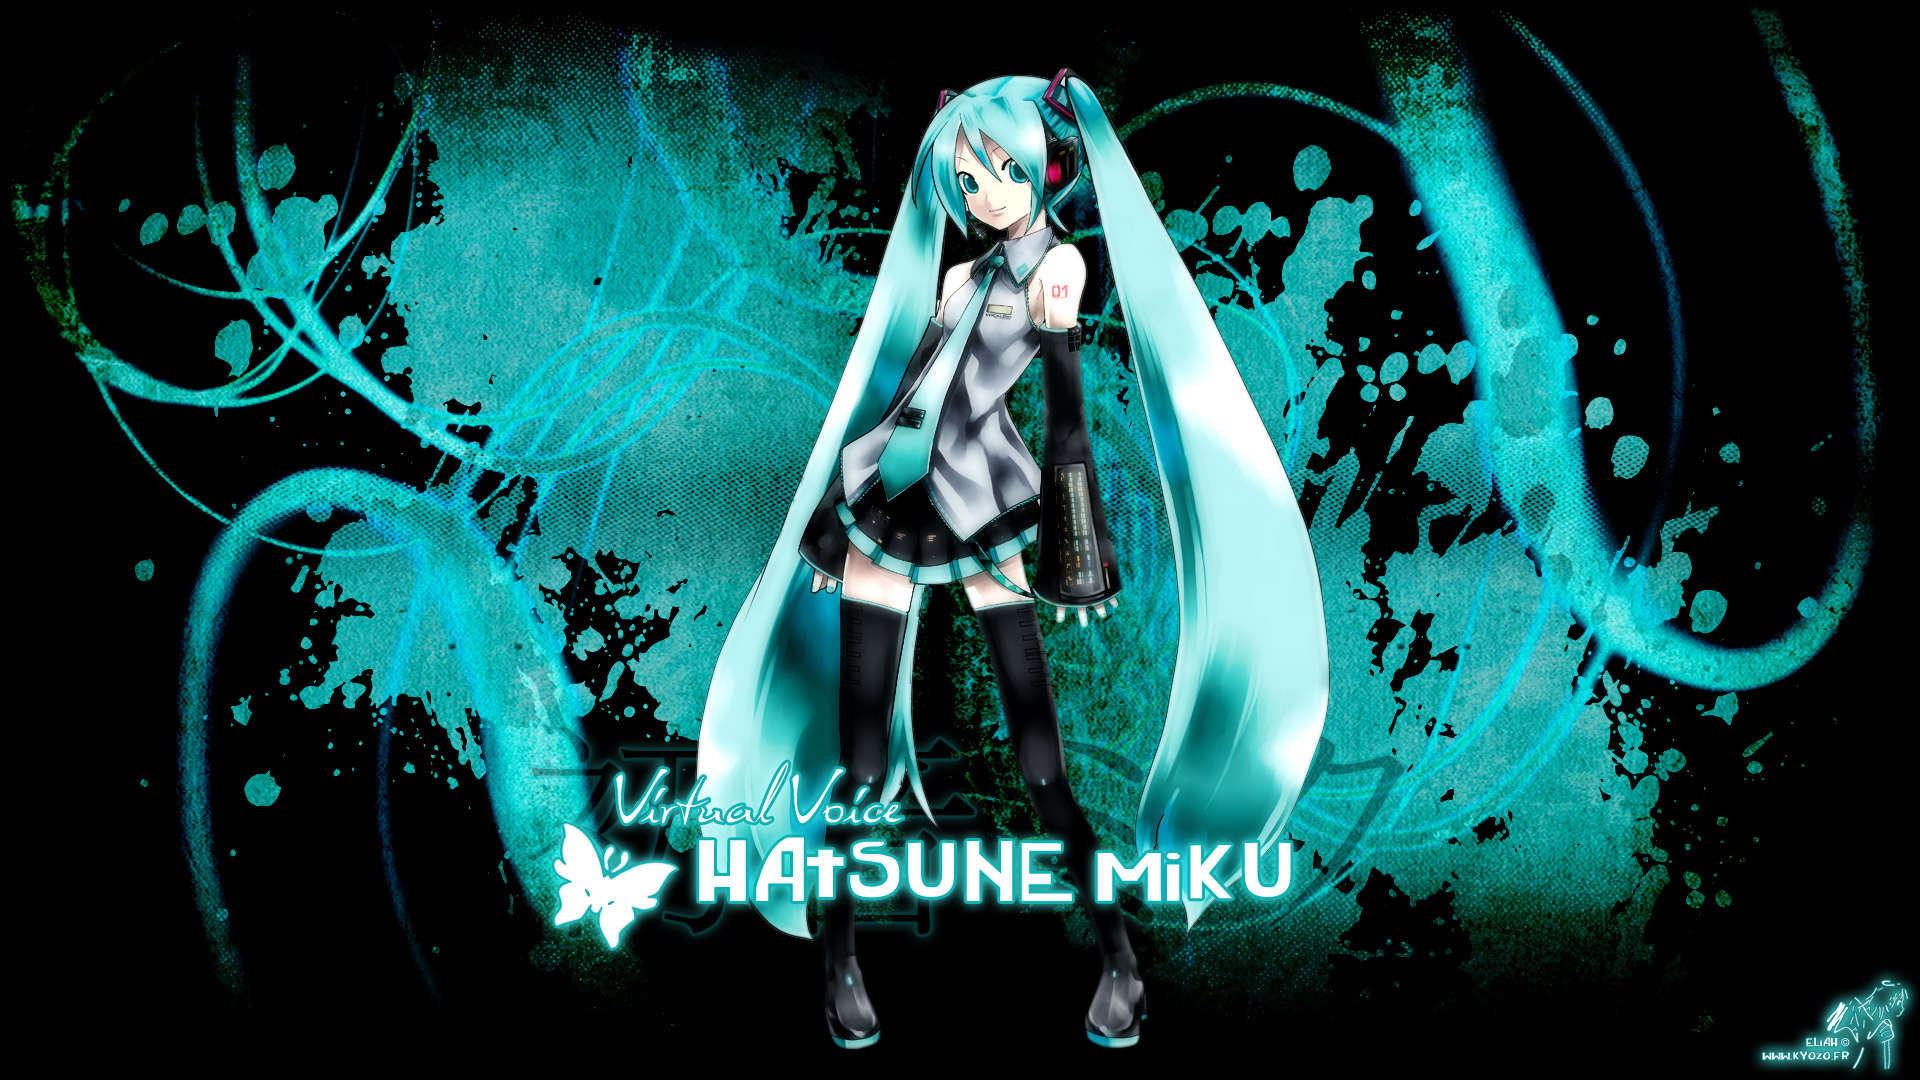 hatsune miku wallpaper,cg artwork,font,graphic design,darkness,graphics